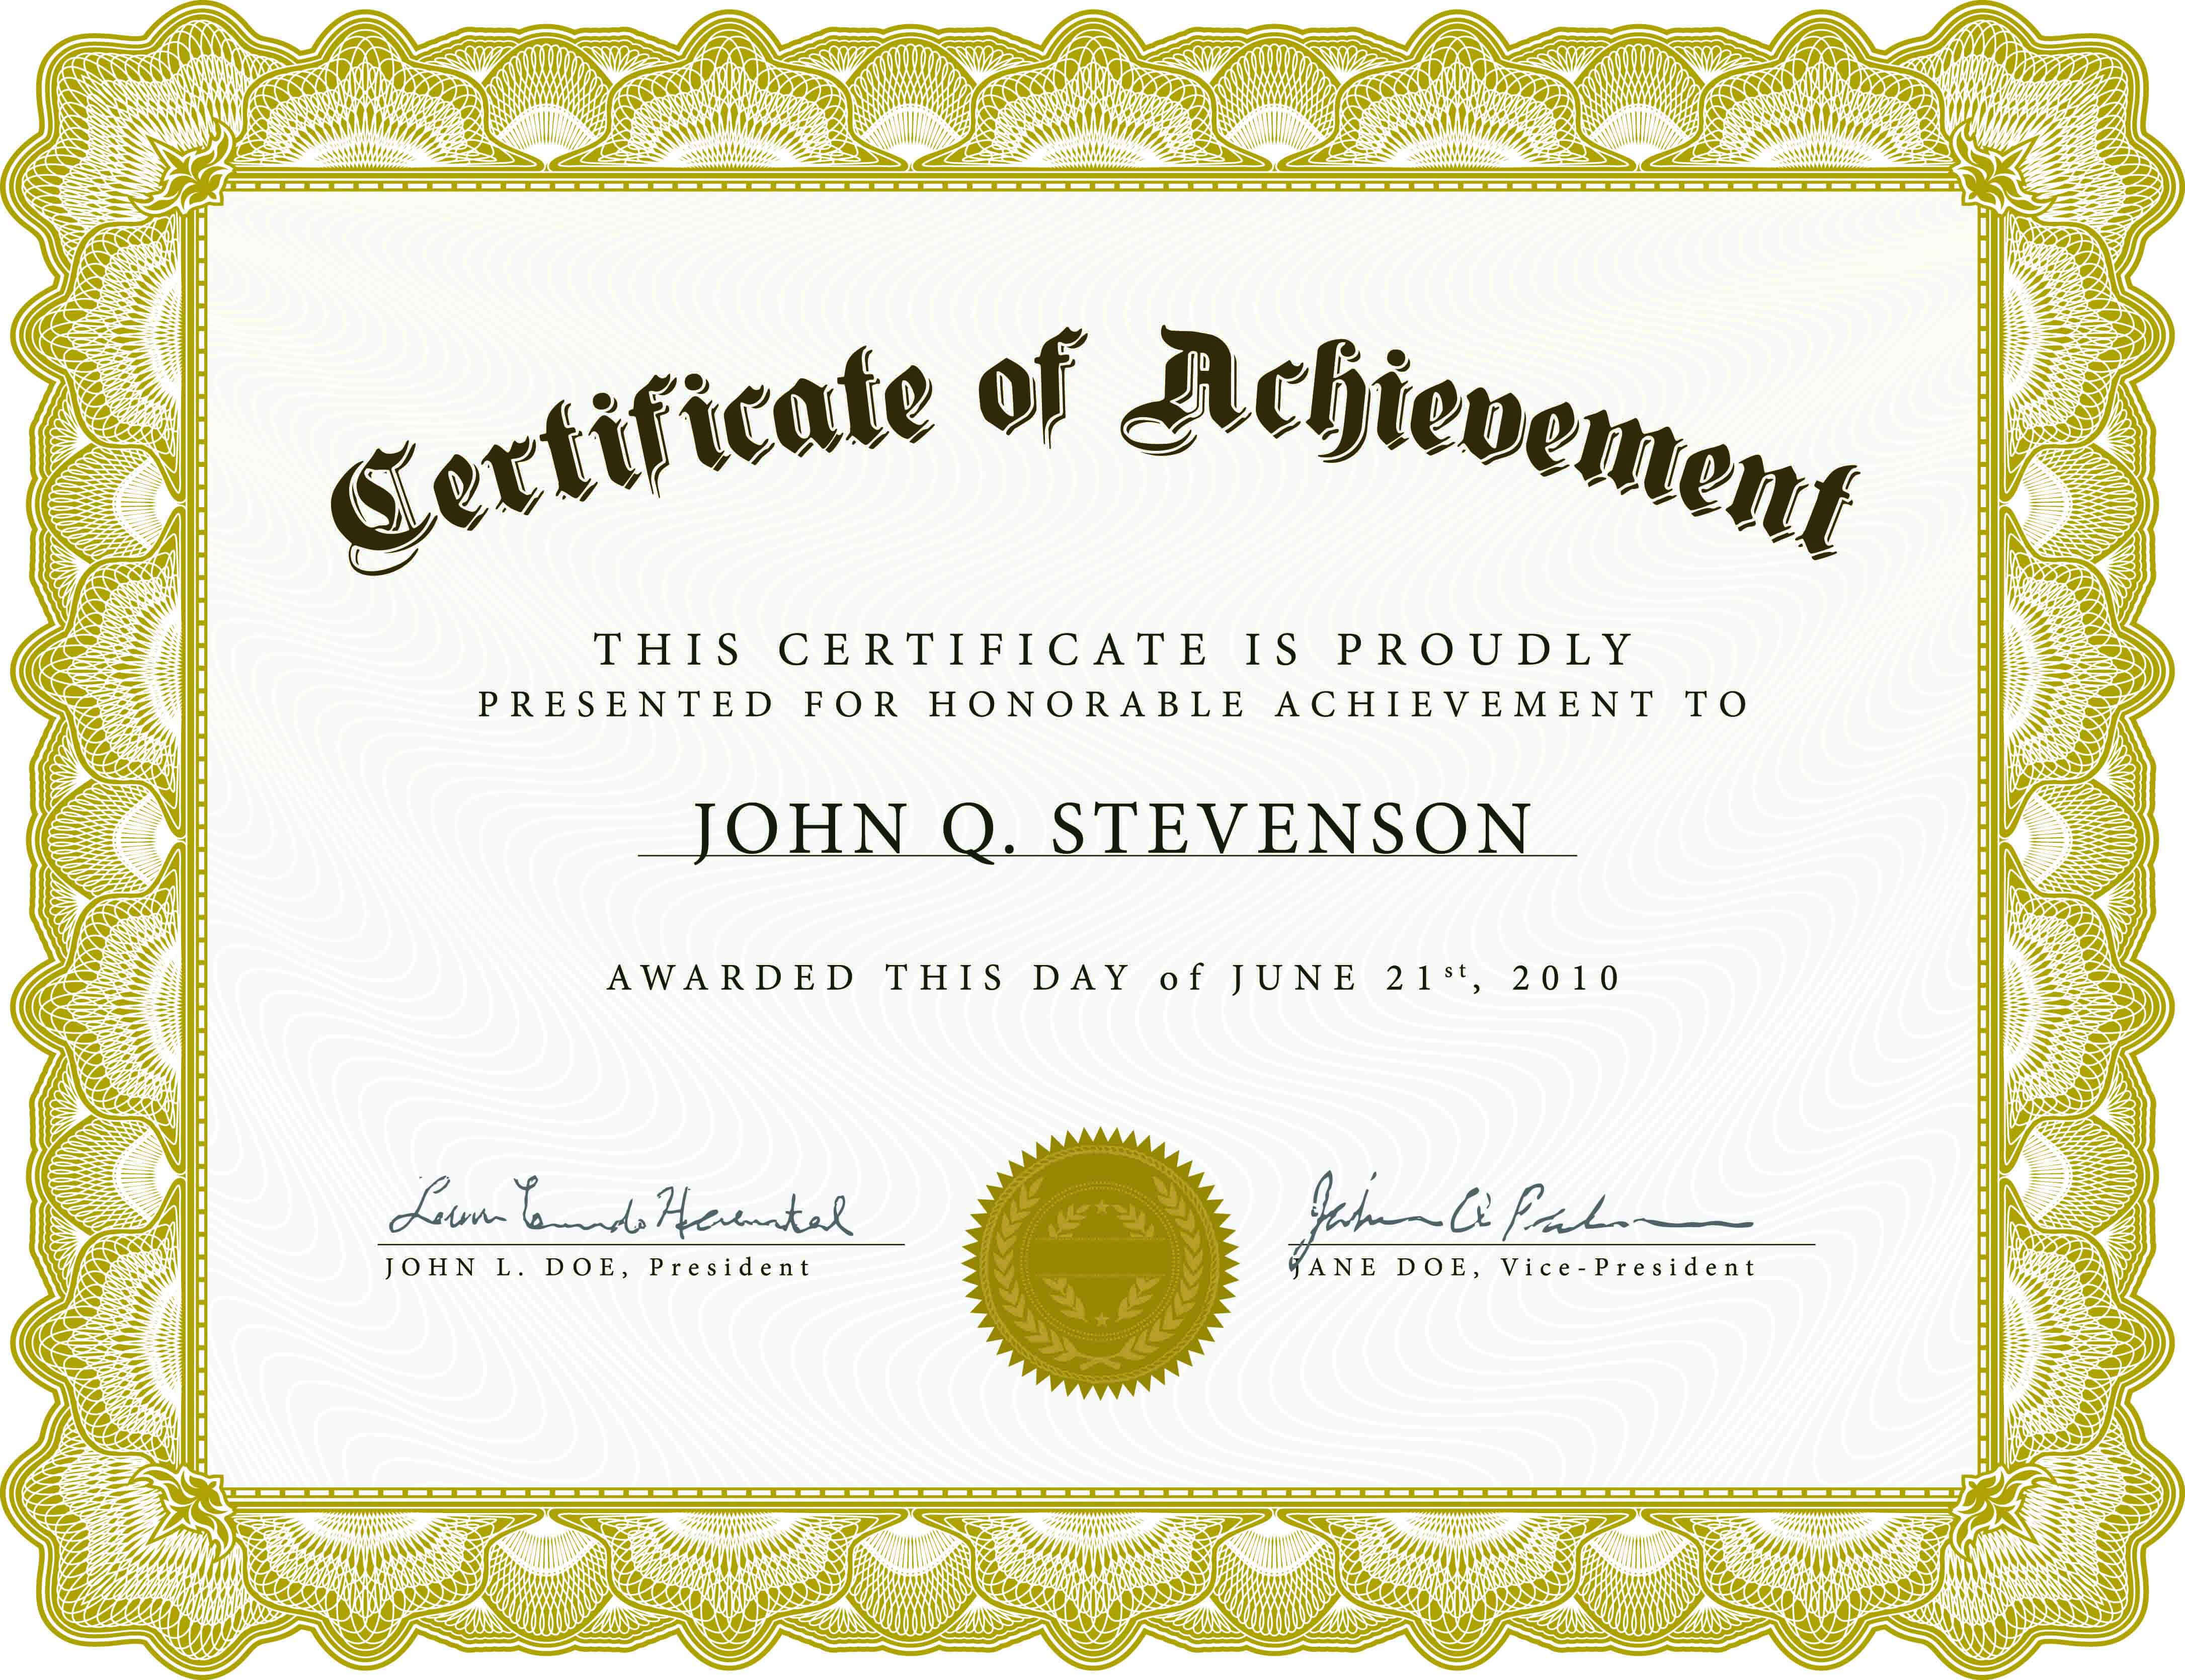 Certificate Of Academic Achievement Template | Photo Stock Regarding Hayes Certificate Templates